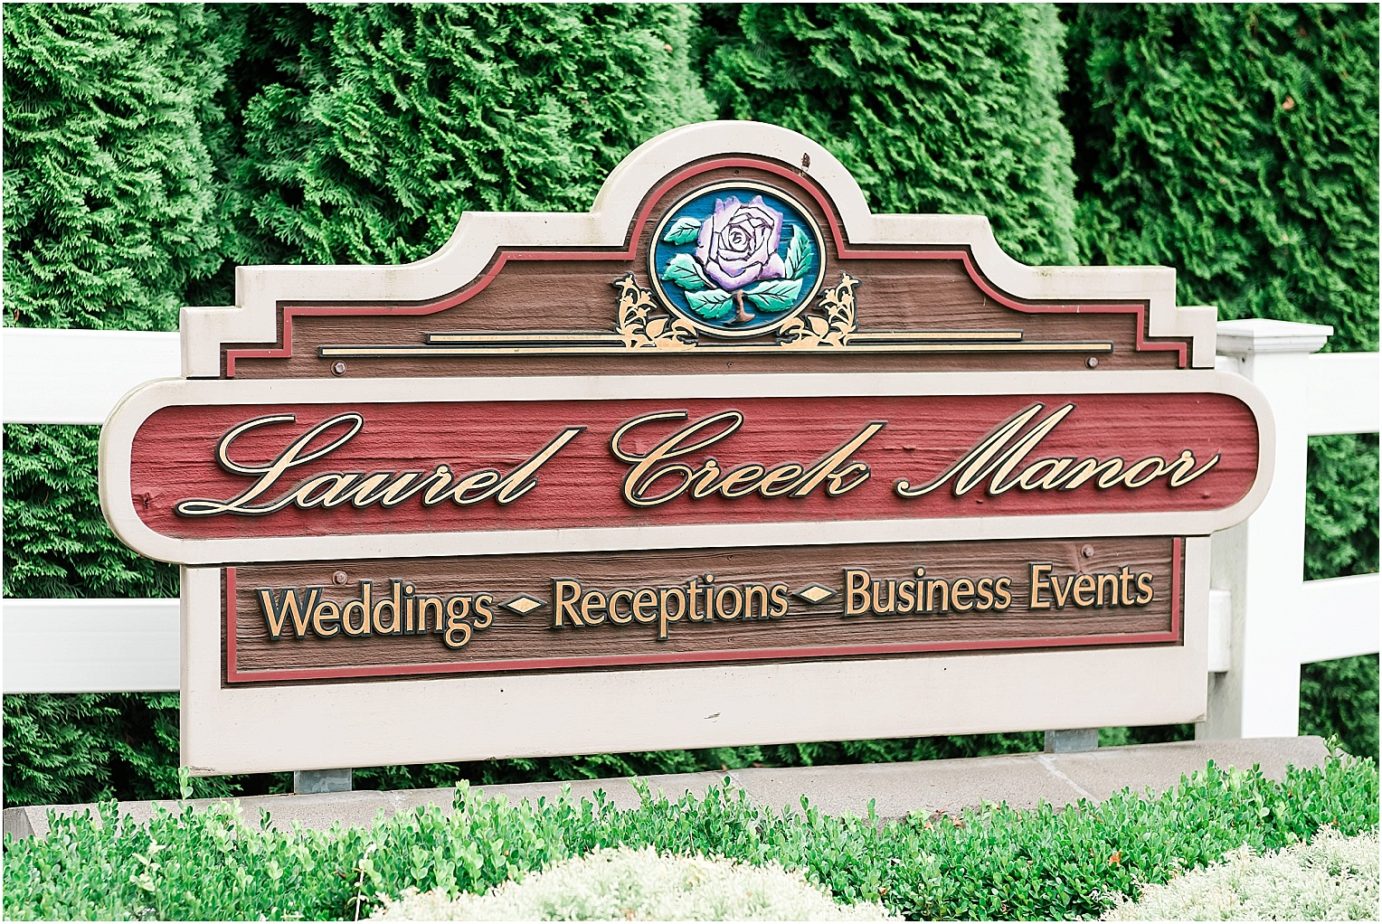 Laurel Creek Manor Wedding signage